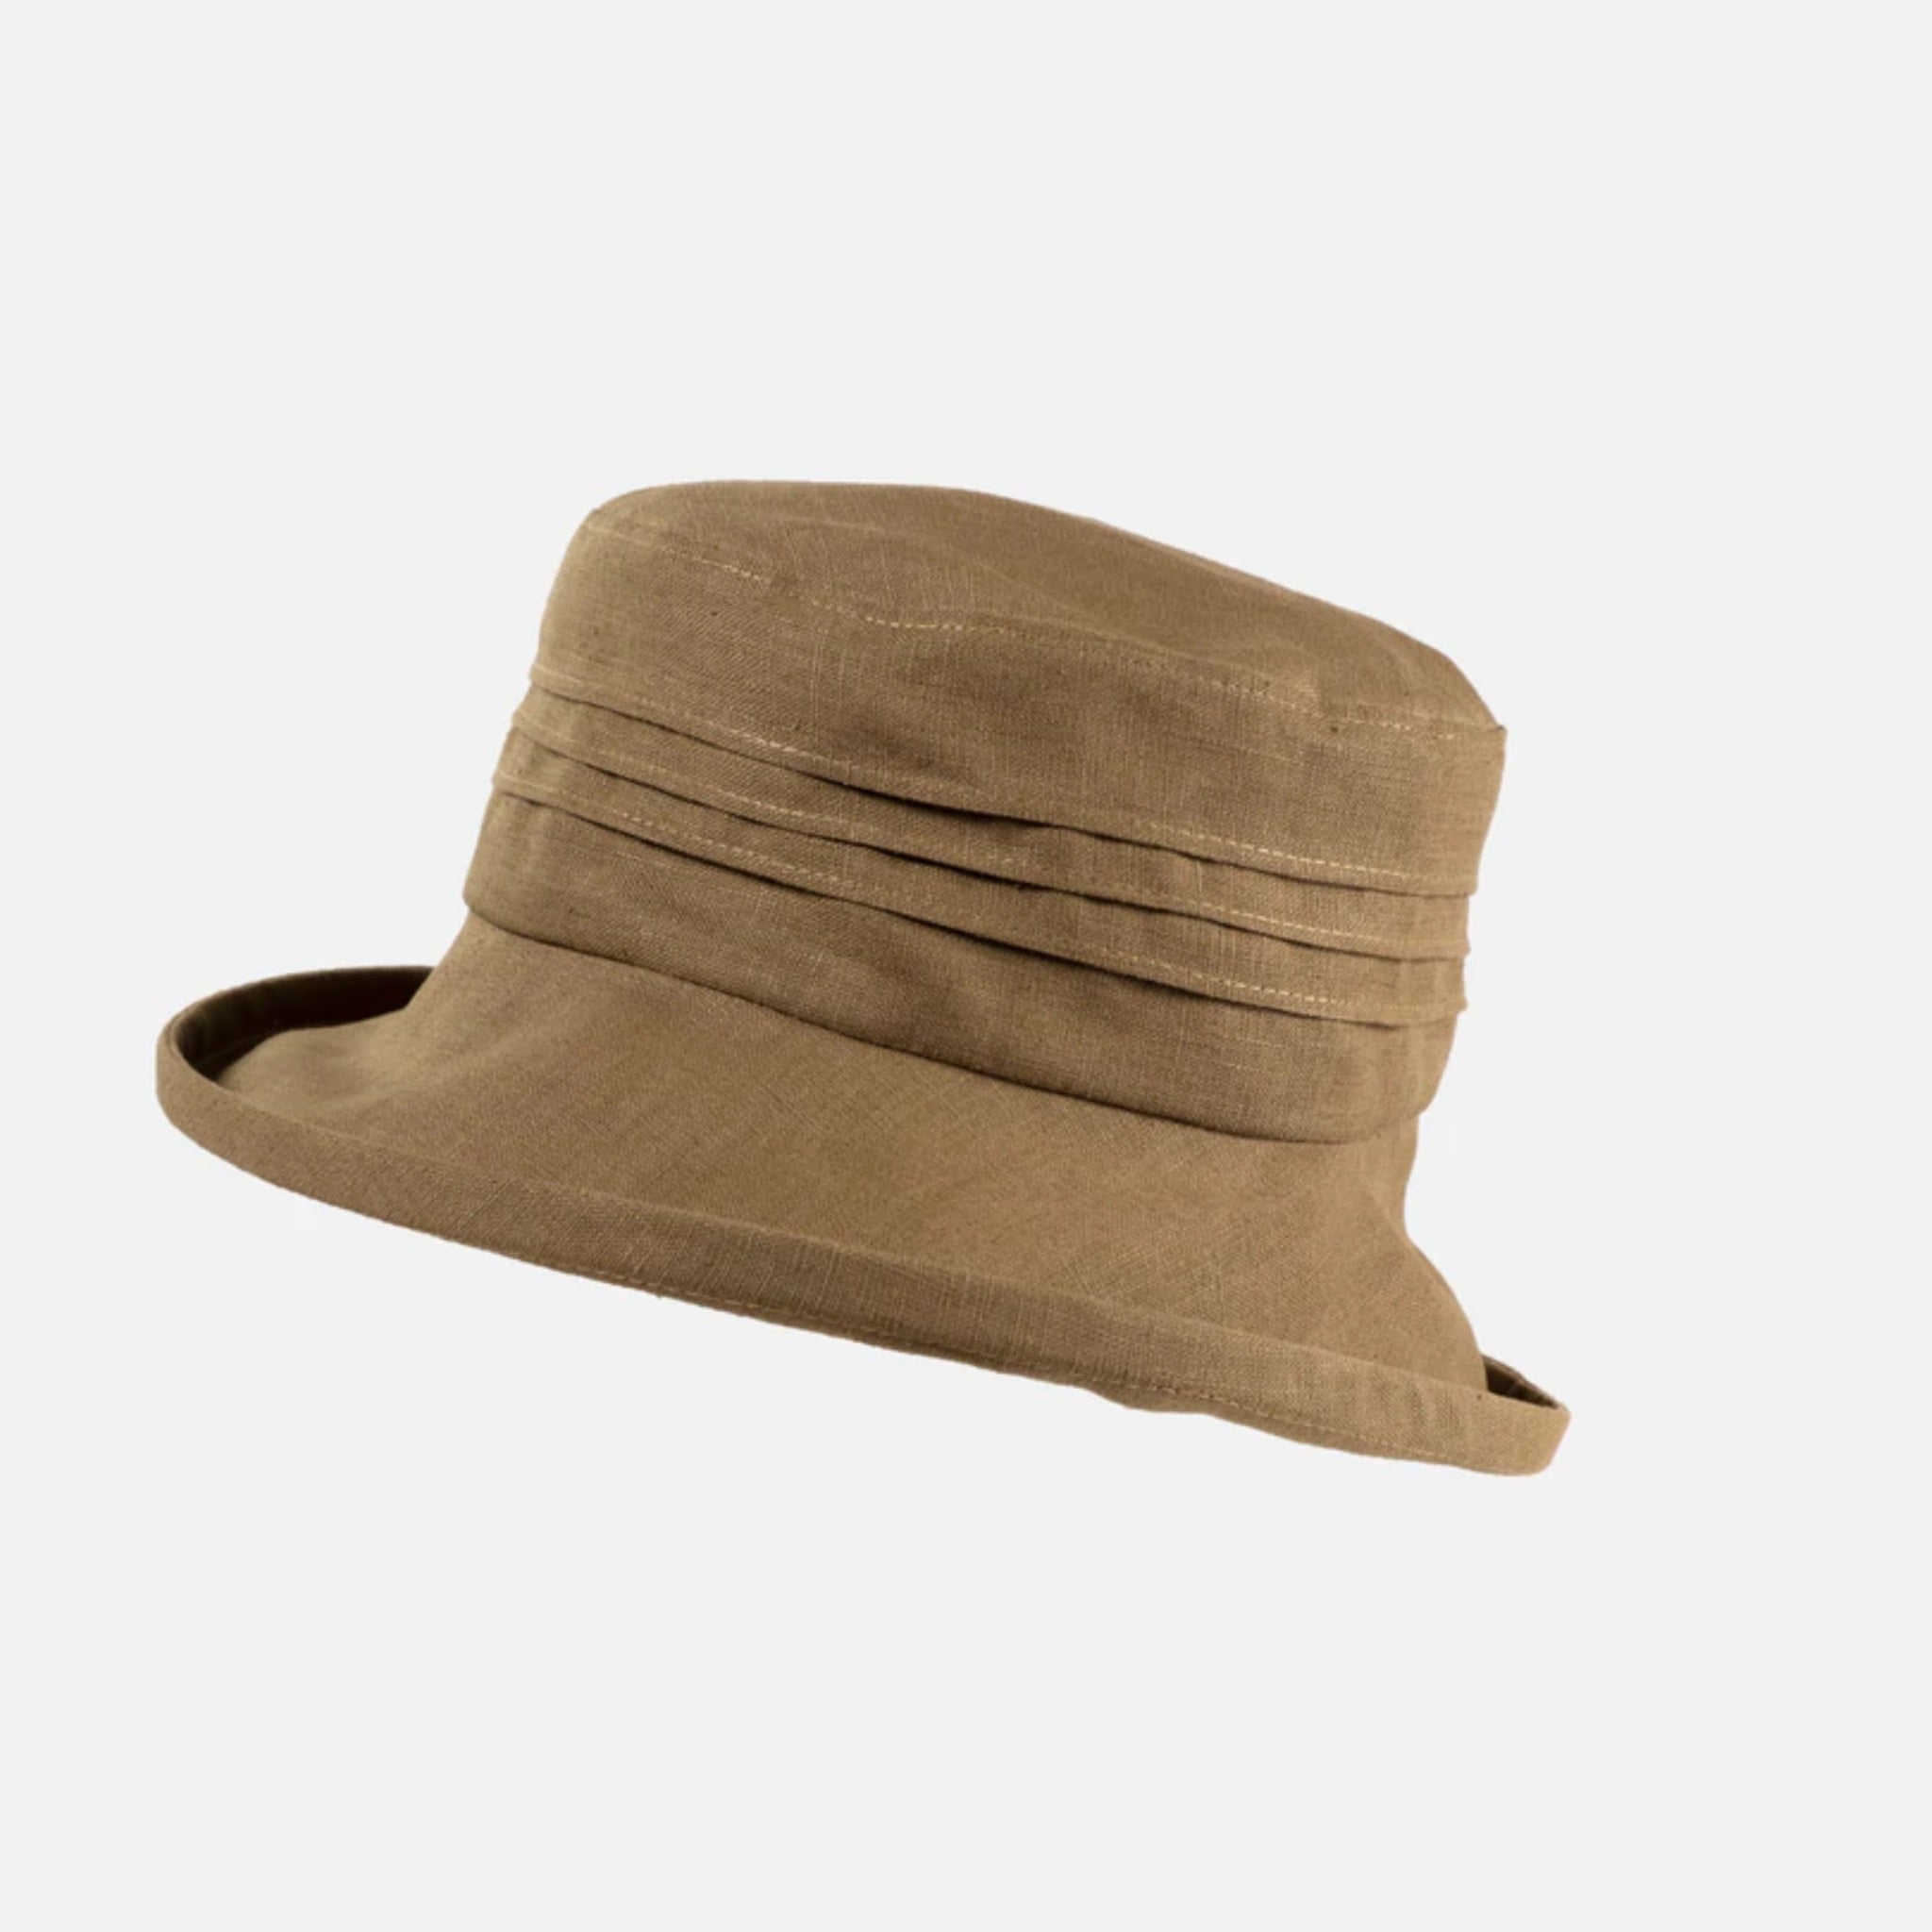 The Hat Shop Proppa Toppa Small Brim Packable Linen Sun Hat Dark Beige